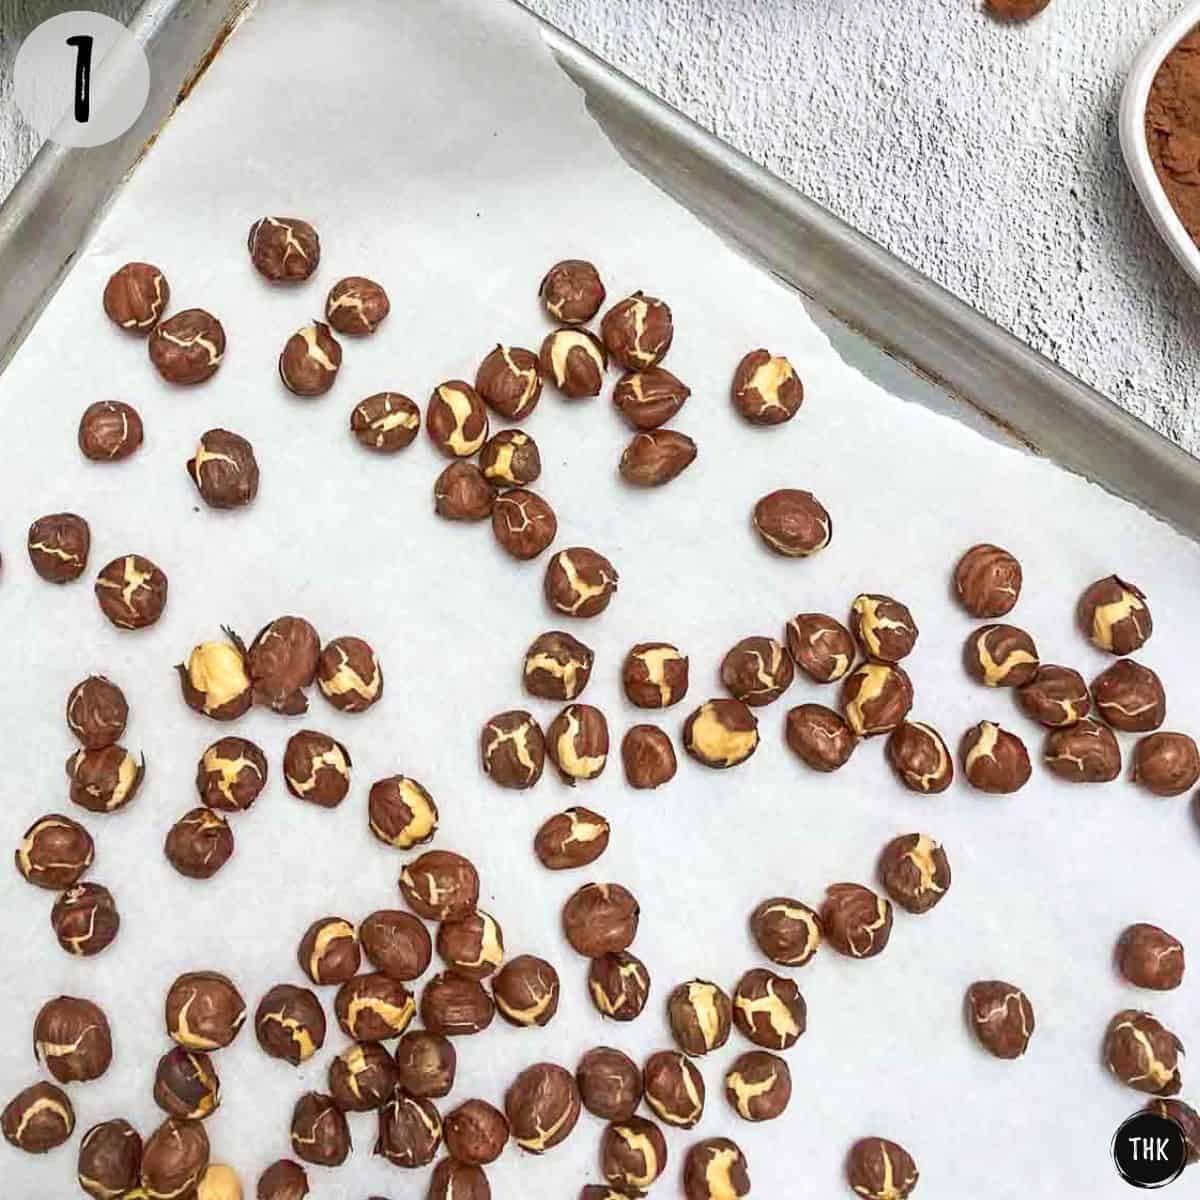 Hazelnuts on baking tray.